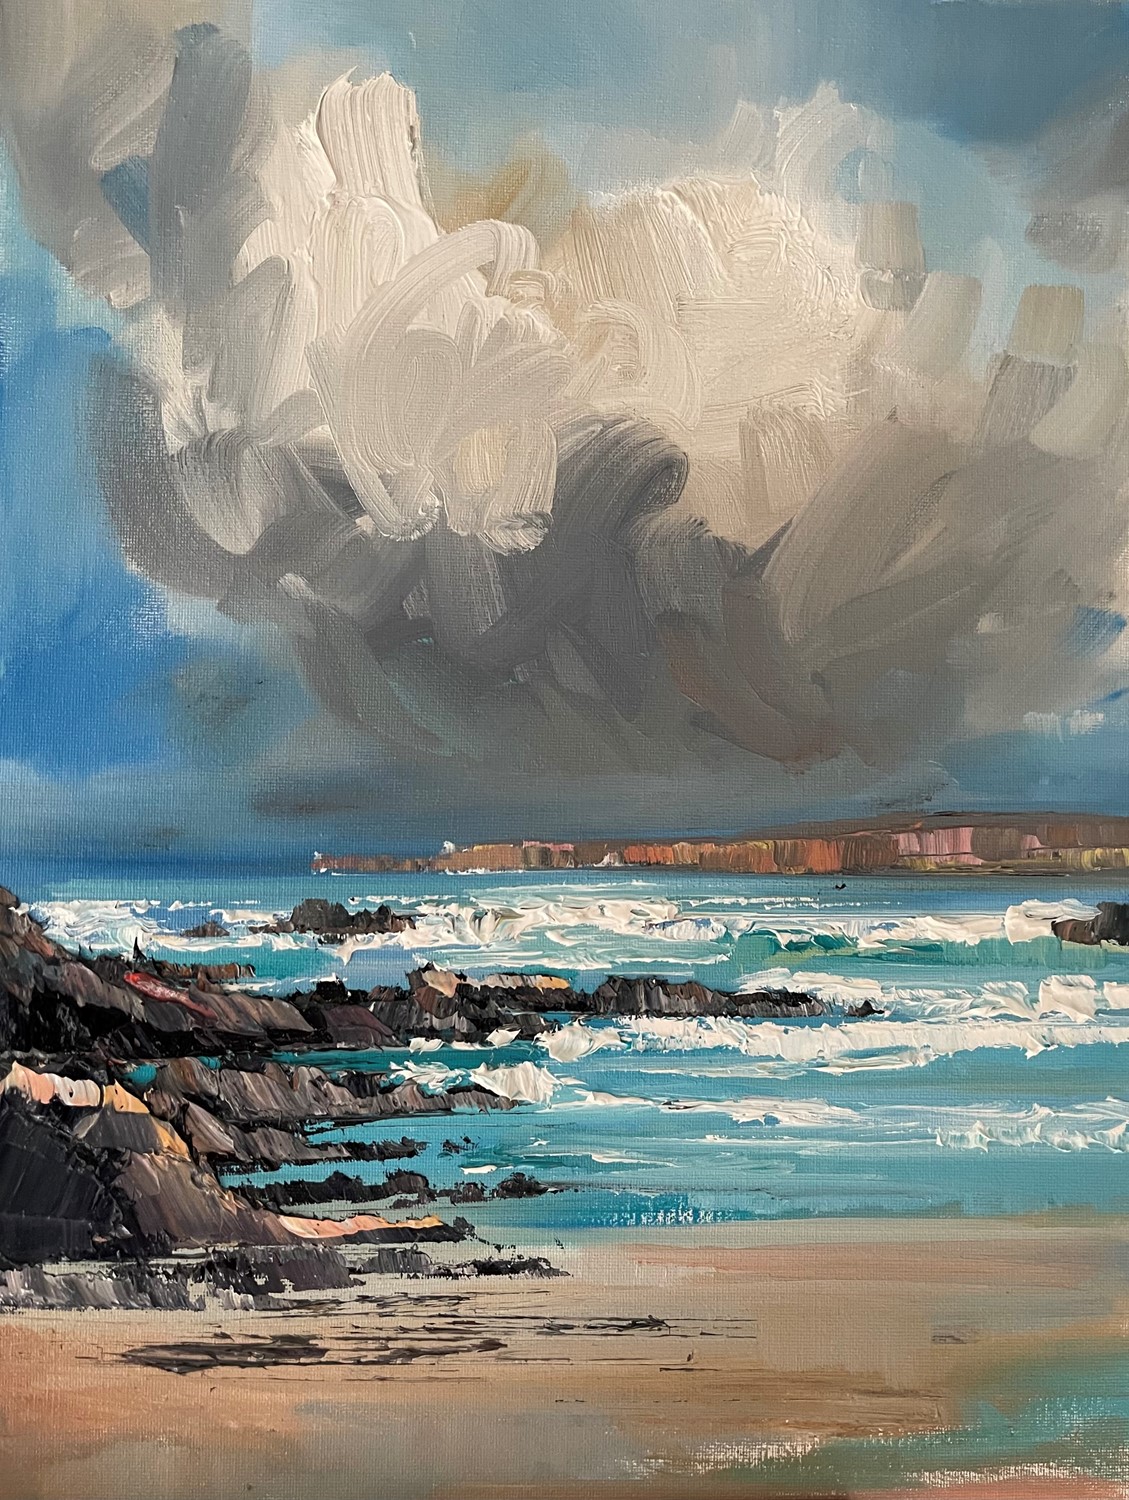 'Ominous Cloud Achmelvich ' by artist Rosanne Barr